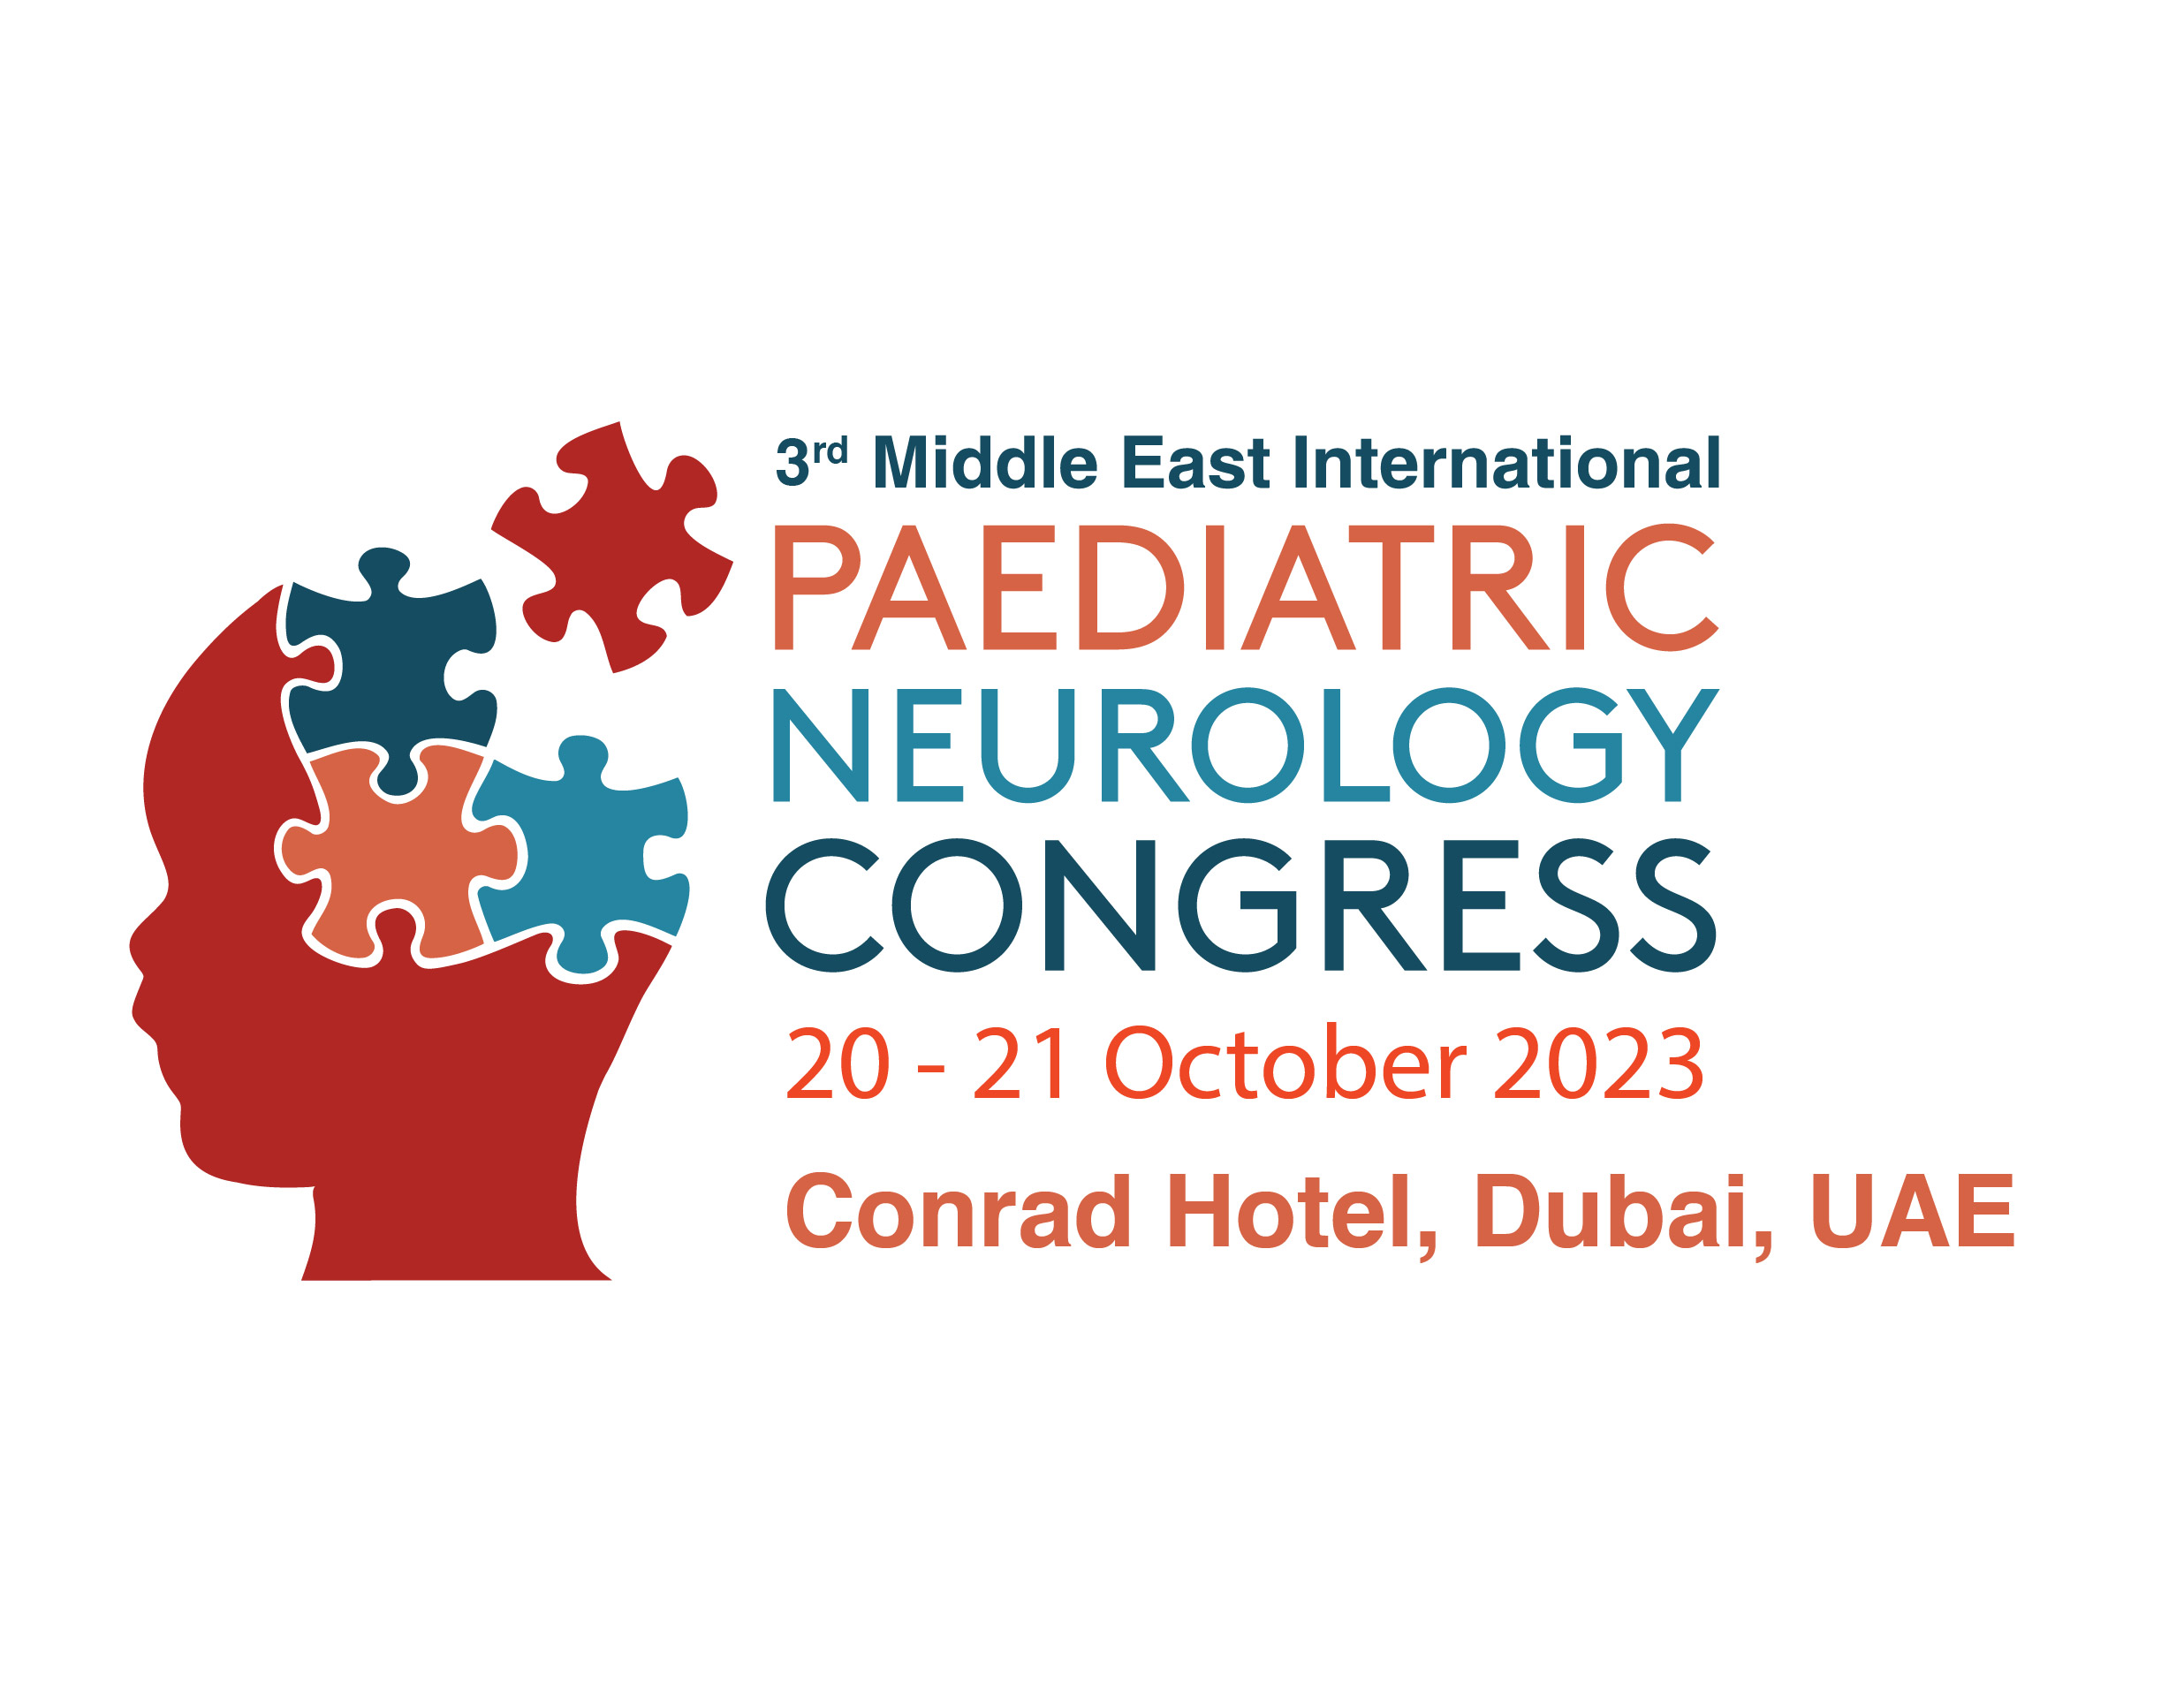 3rd Middle East International Paediatric Neurology Congress, Dubai, United Arab Emirates